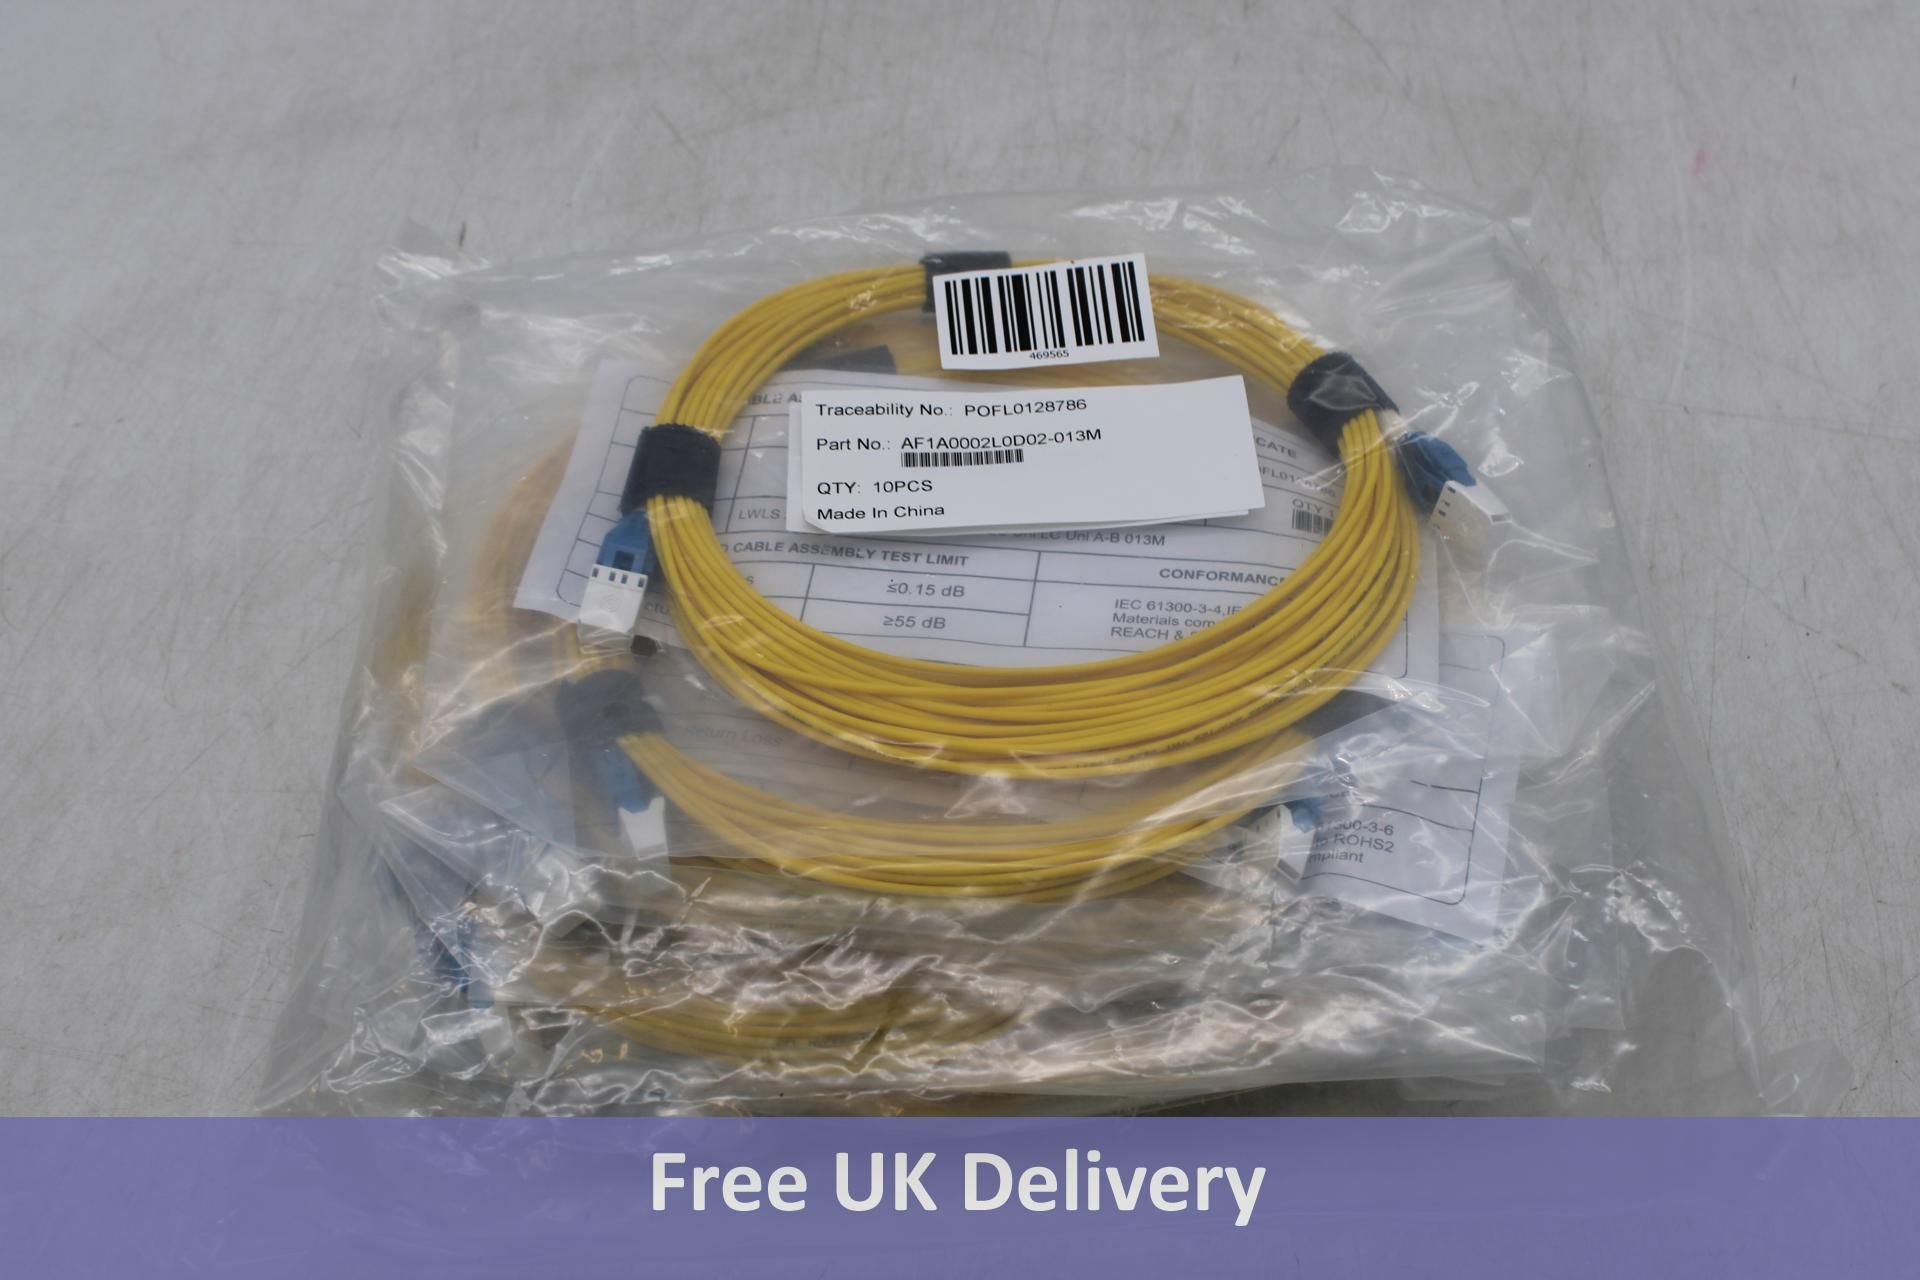 Ten Thirteen-metre Fibre Optic Cables, Yellow